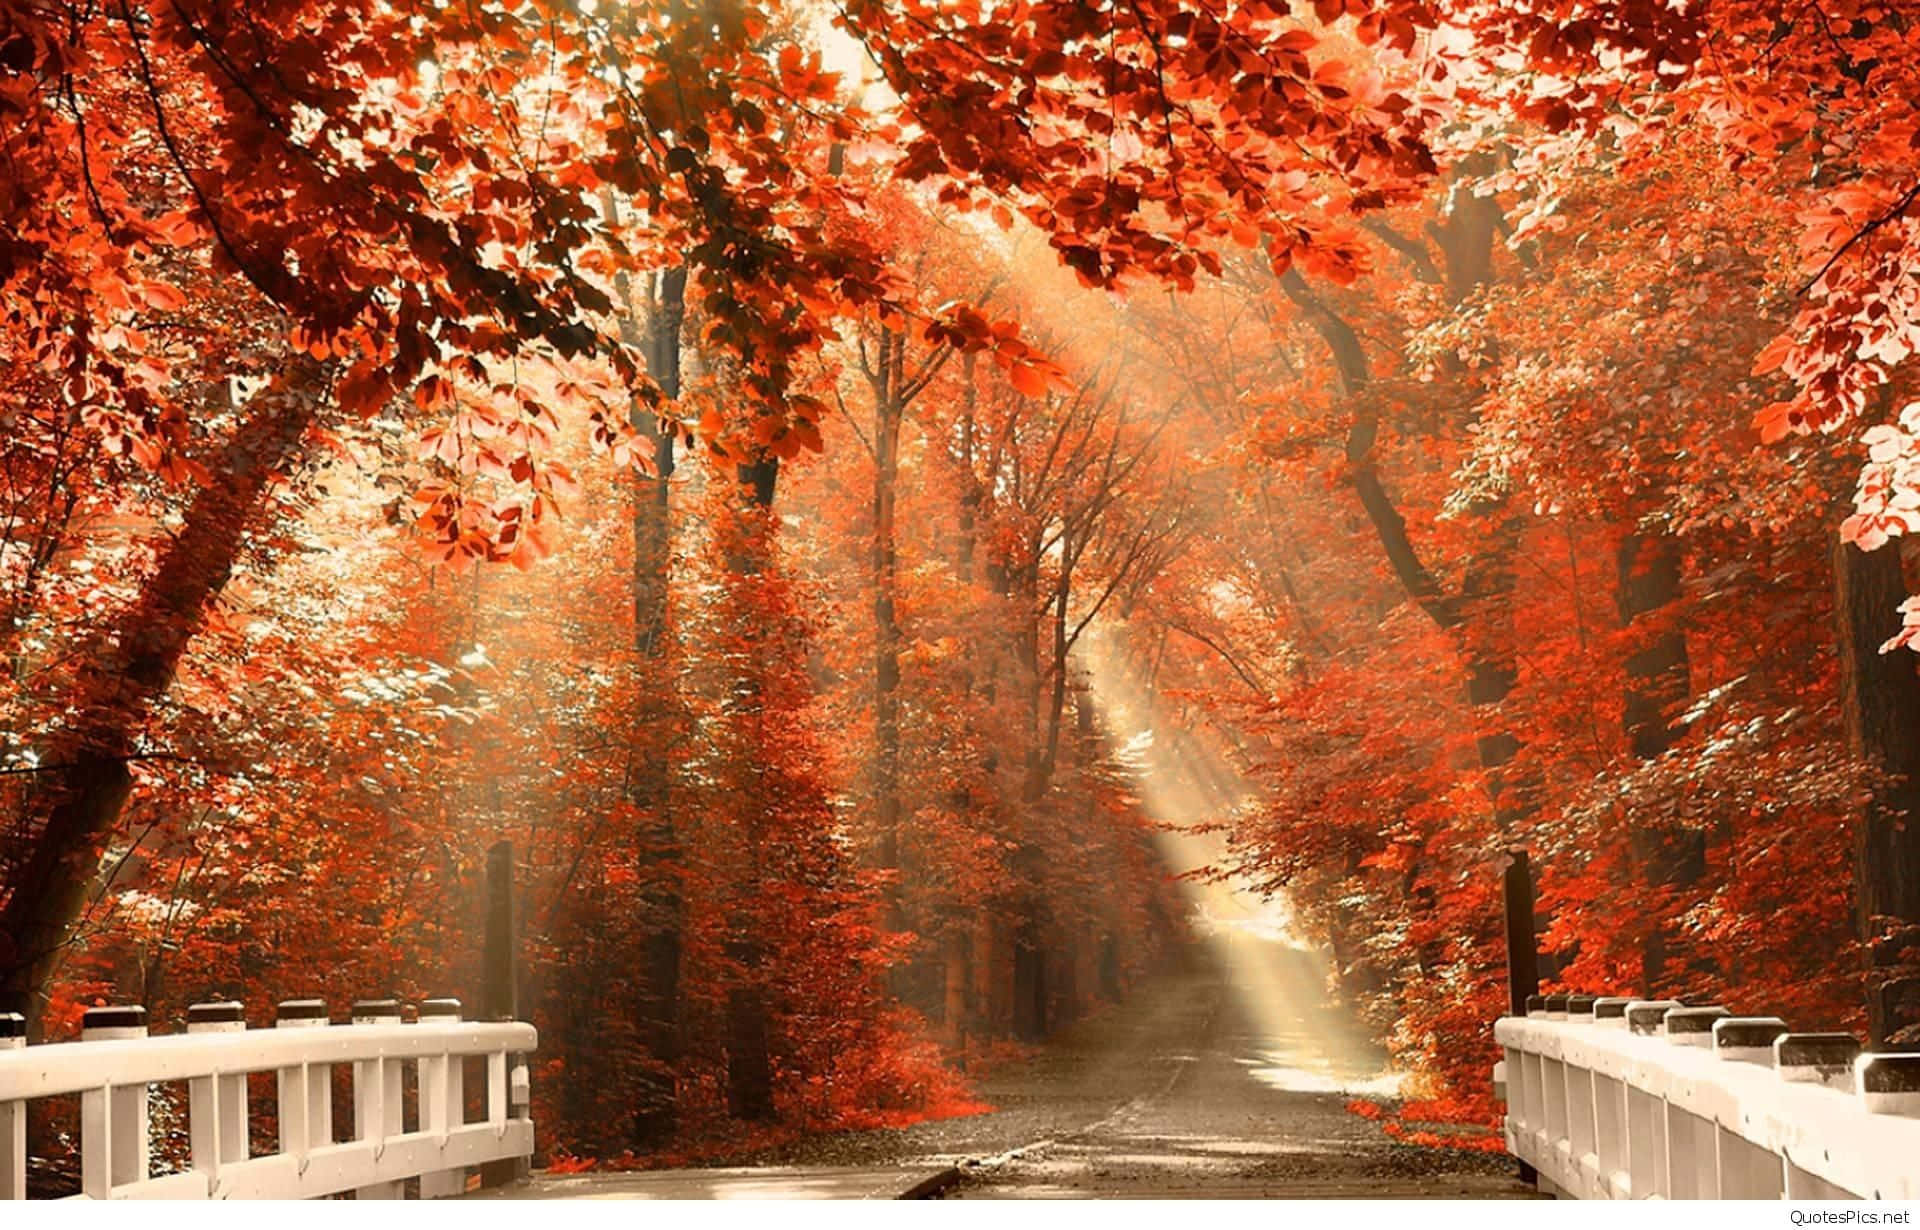 Autumn Season Aesthetic Forest View With Bridge Wallpaper